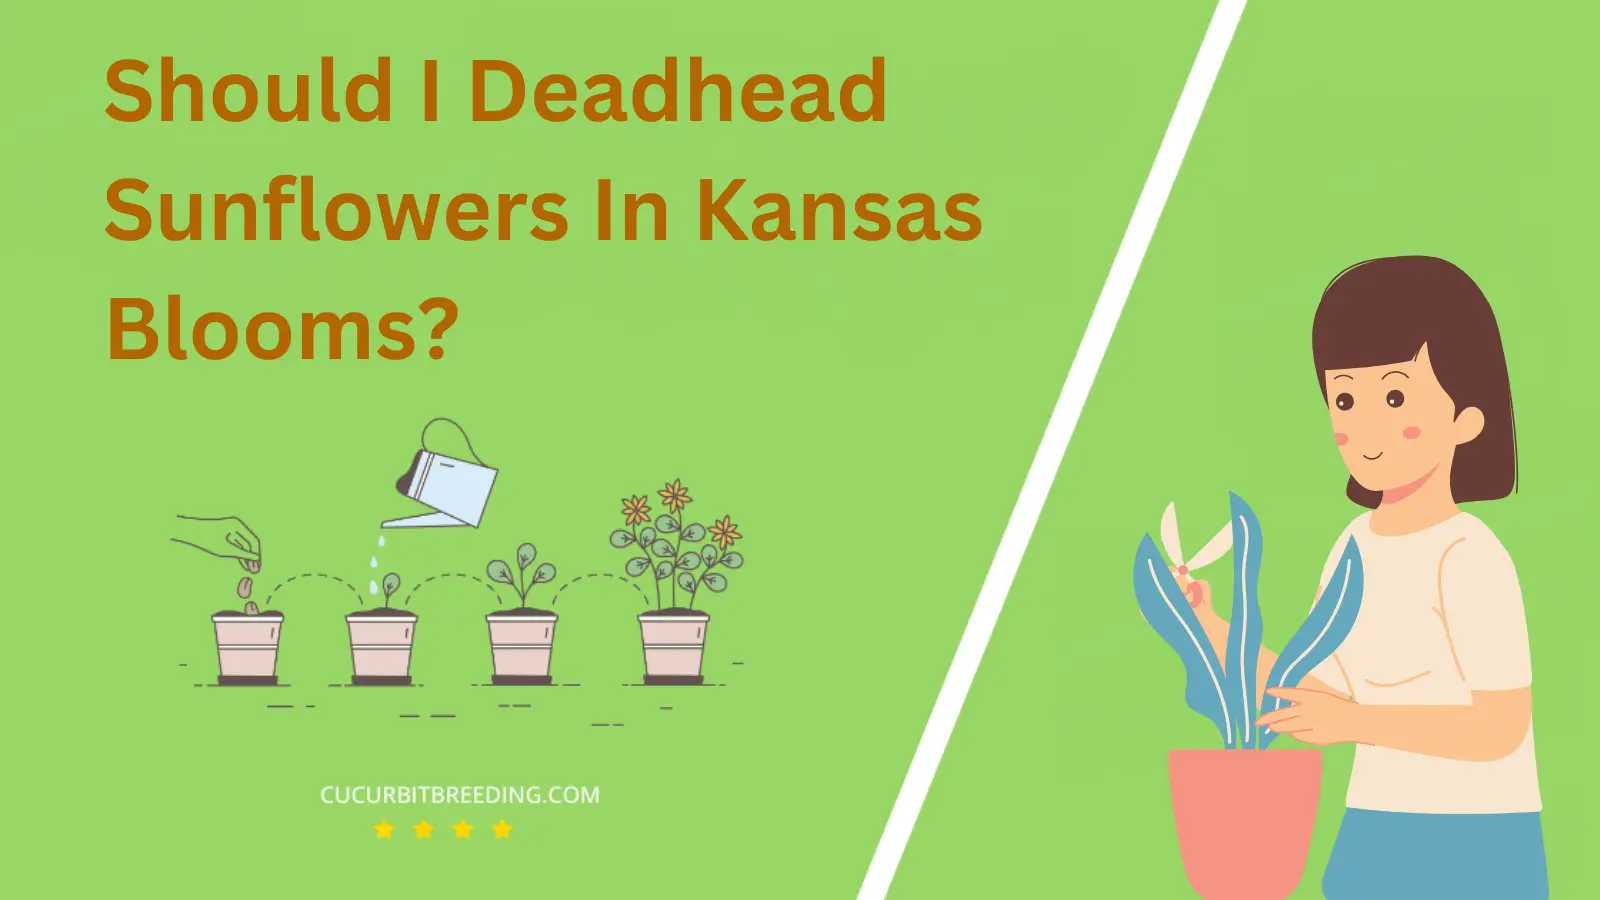 Should I Deadhead Sunflowers In Kansas Blooms?